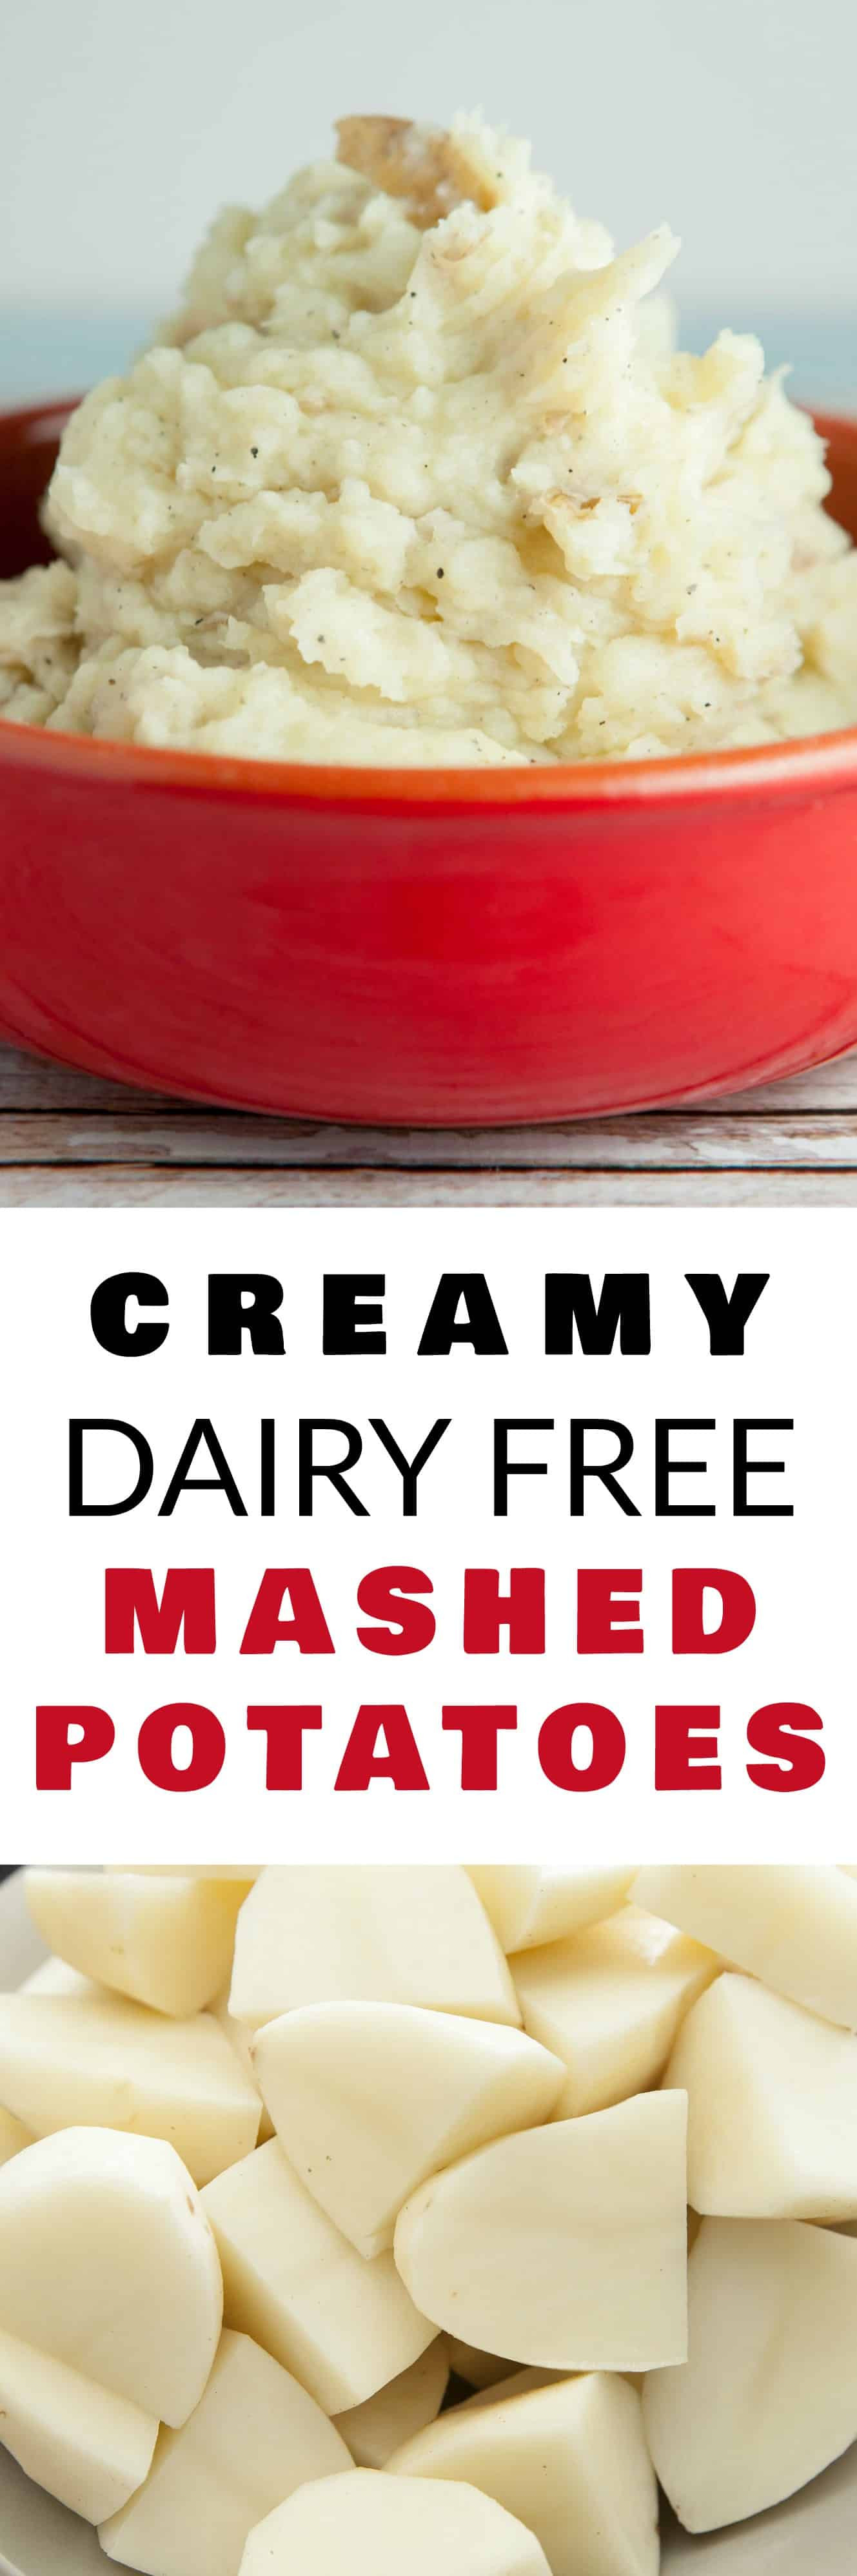 Dairy Free Mashed Potatoes Recipe
 Creamy Garlic Dairy Free Mashed Potatoes Brooklyn Farm Girl